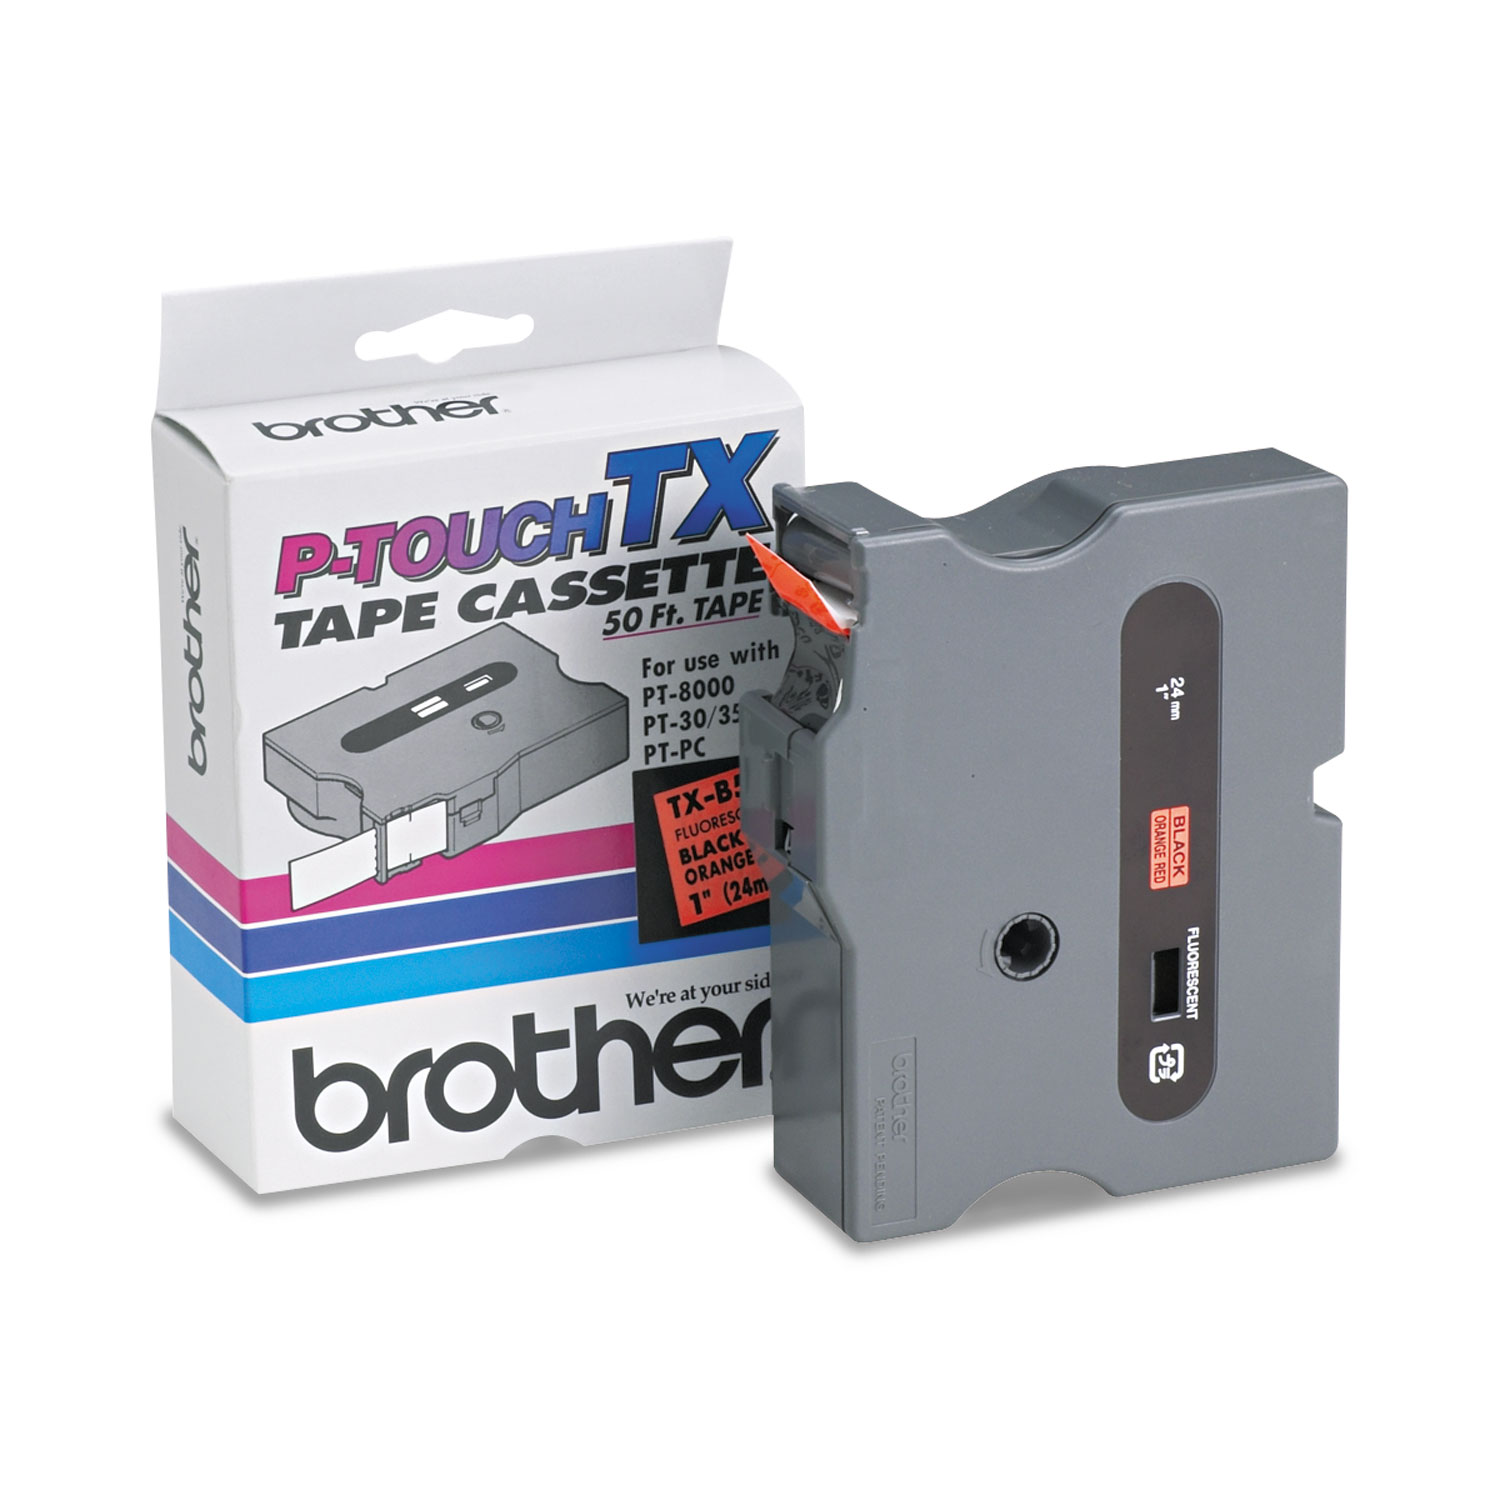 TX Tape Cartridge for PT-8000, PT-PC, PT-30/35, 1w, Black on Fluorescent Orange